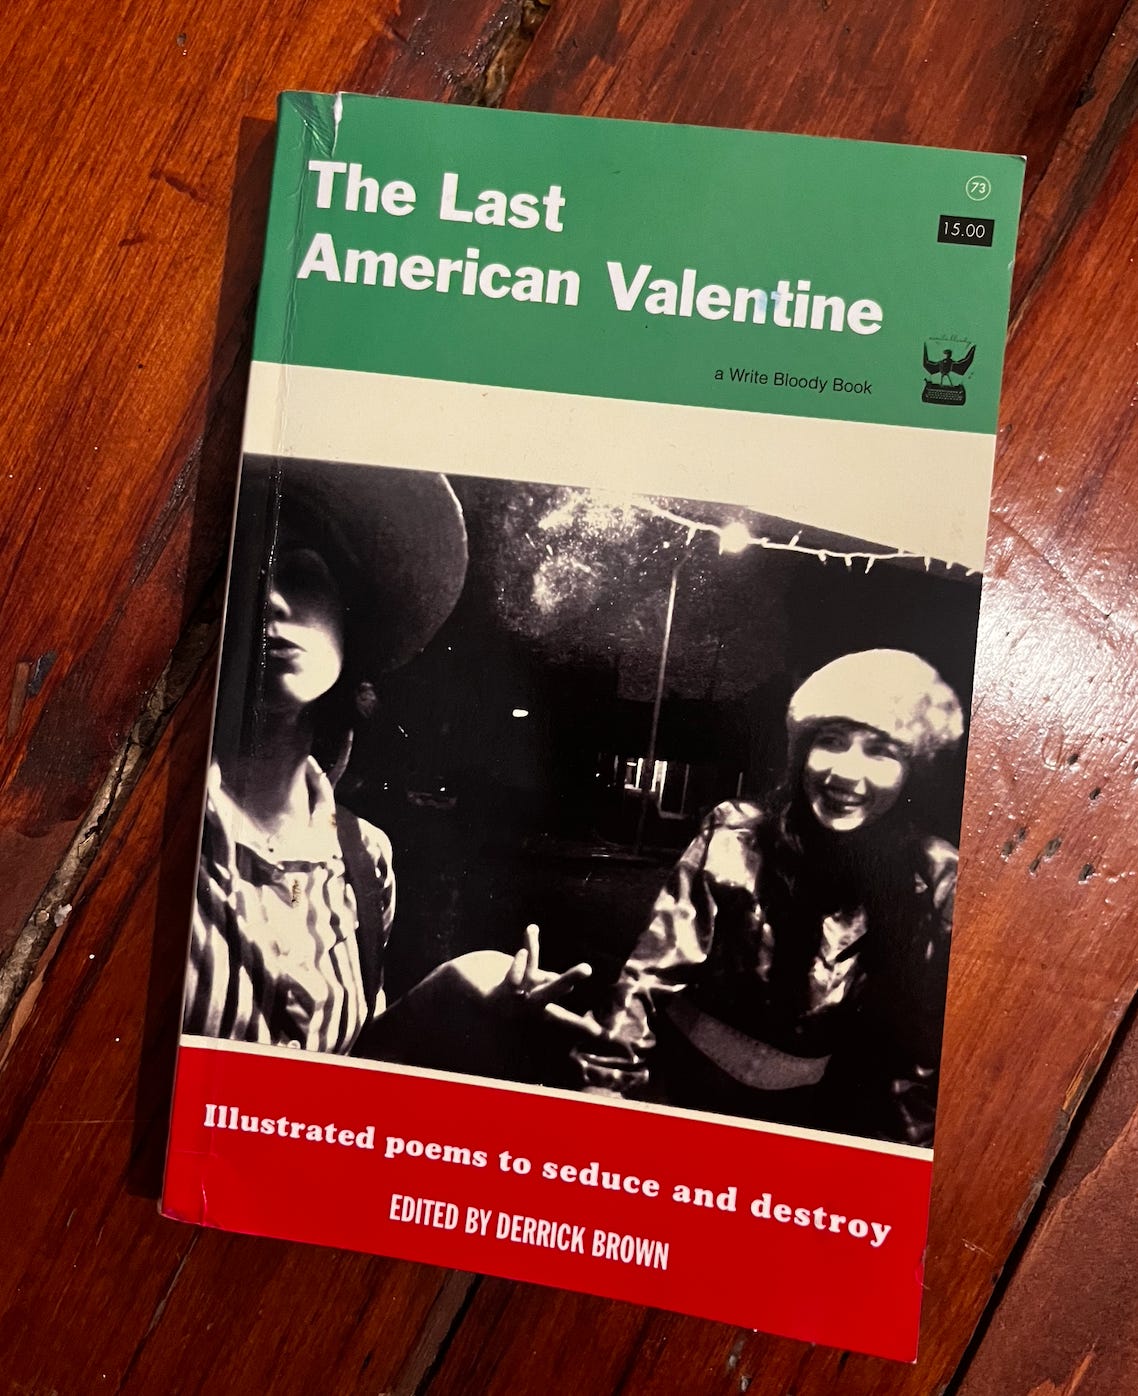 The book "The Last American Valentine" 